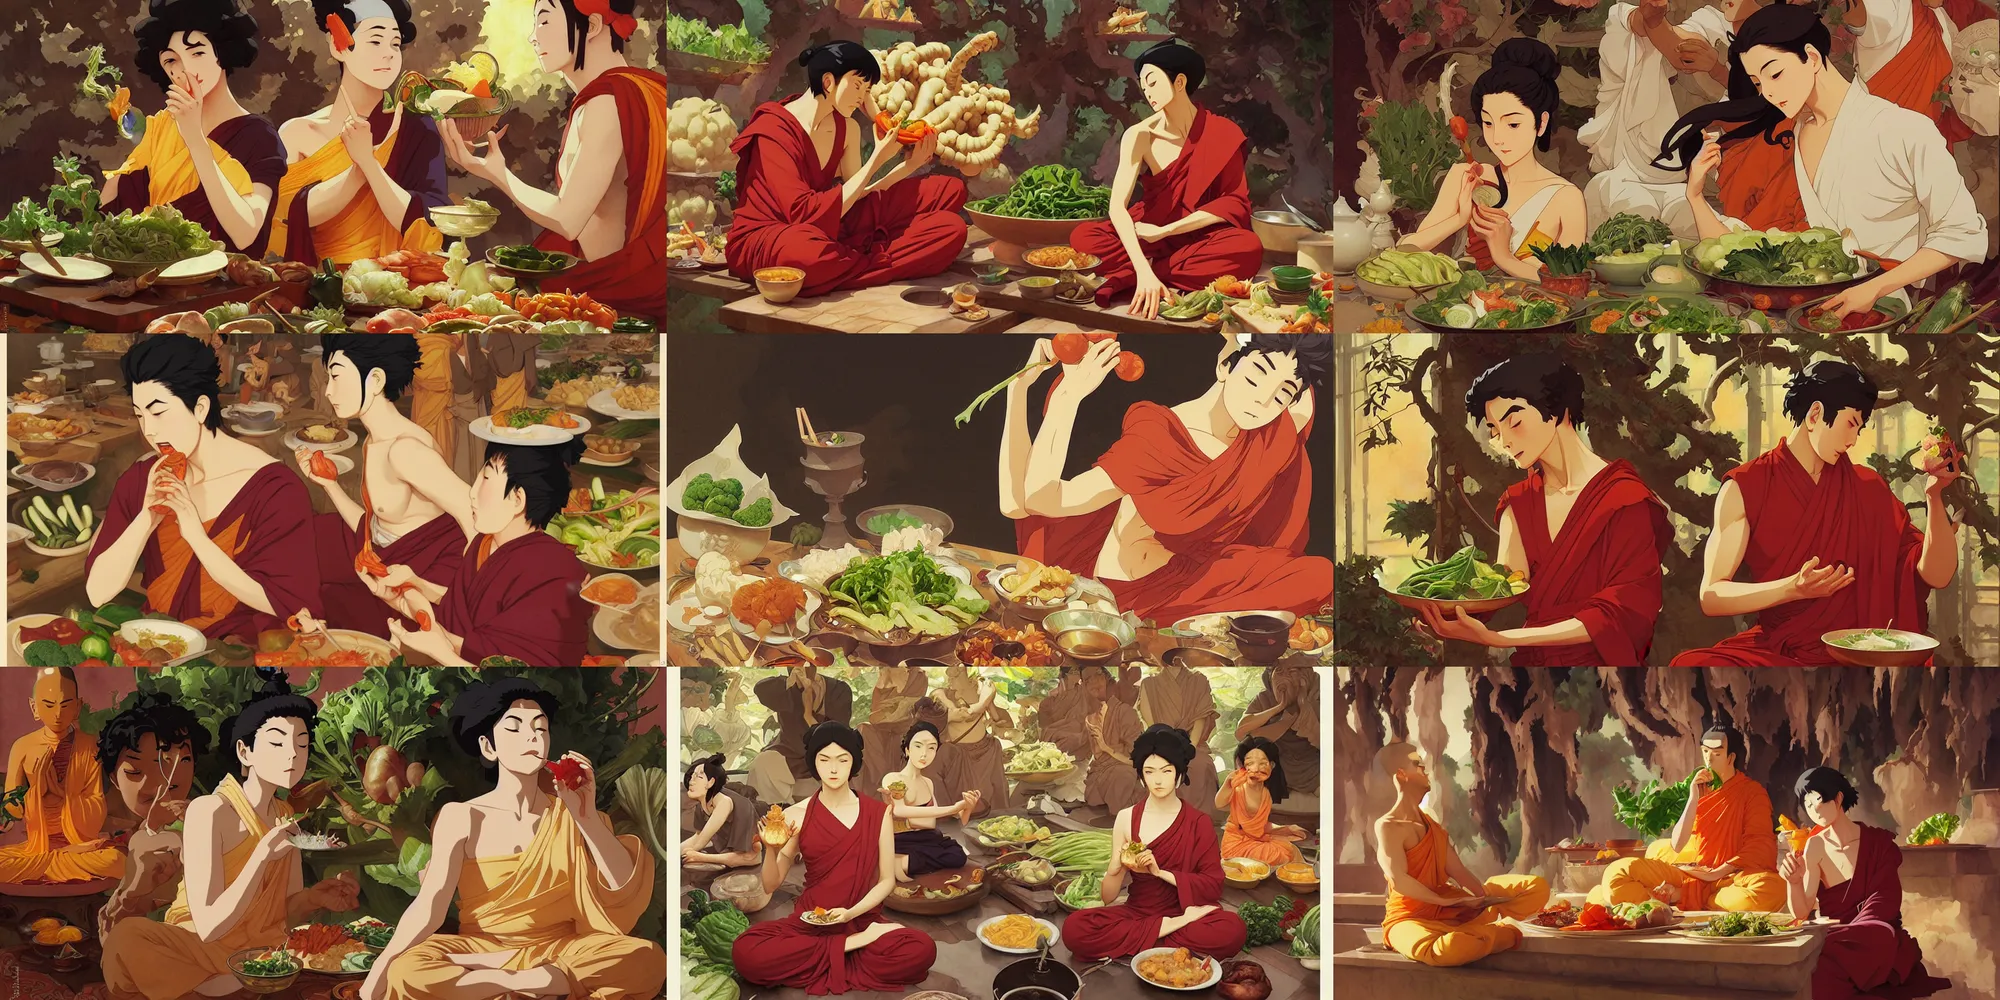 Prompt: buddhism, eating vegetable, in the style of studio ghibli, j. c. leyendecker, greg rutkowski, artem